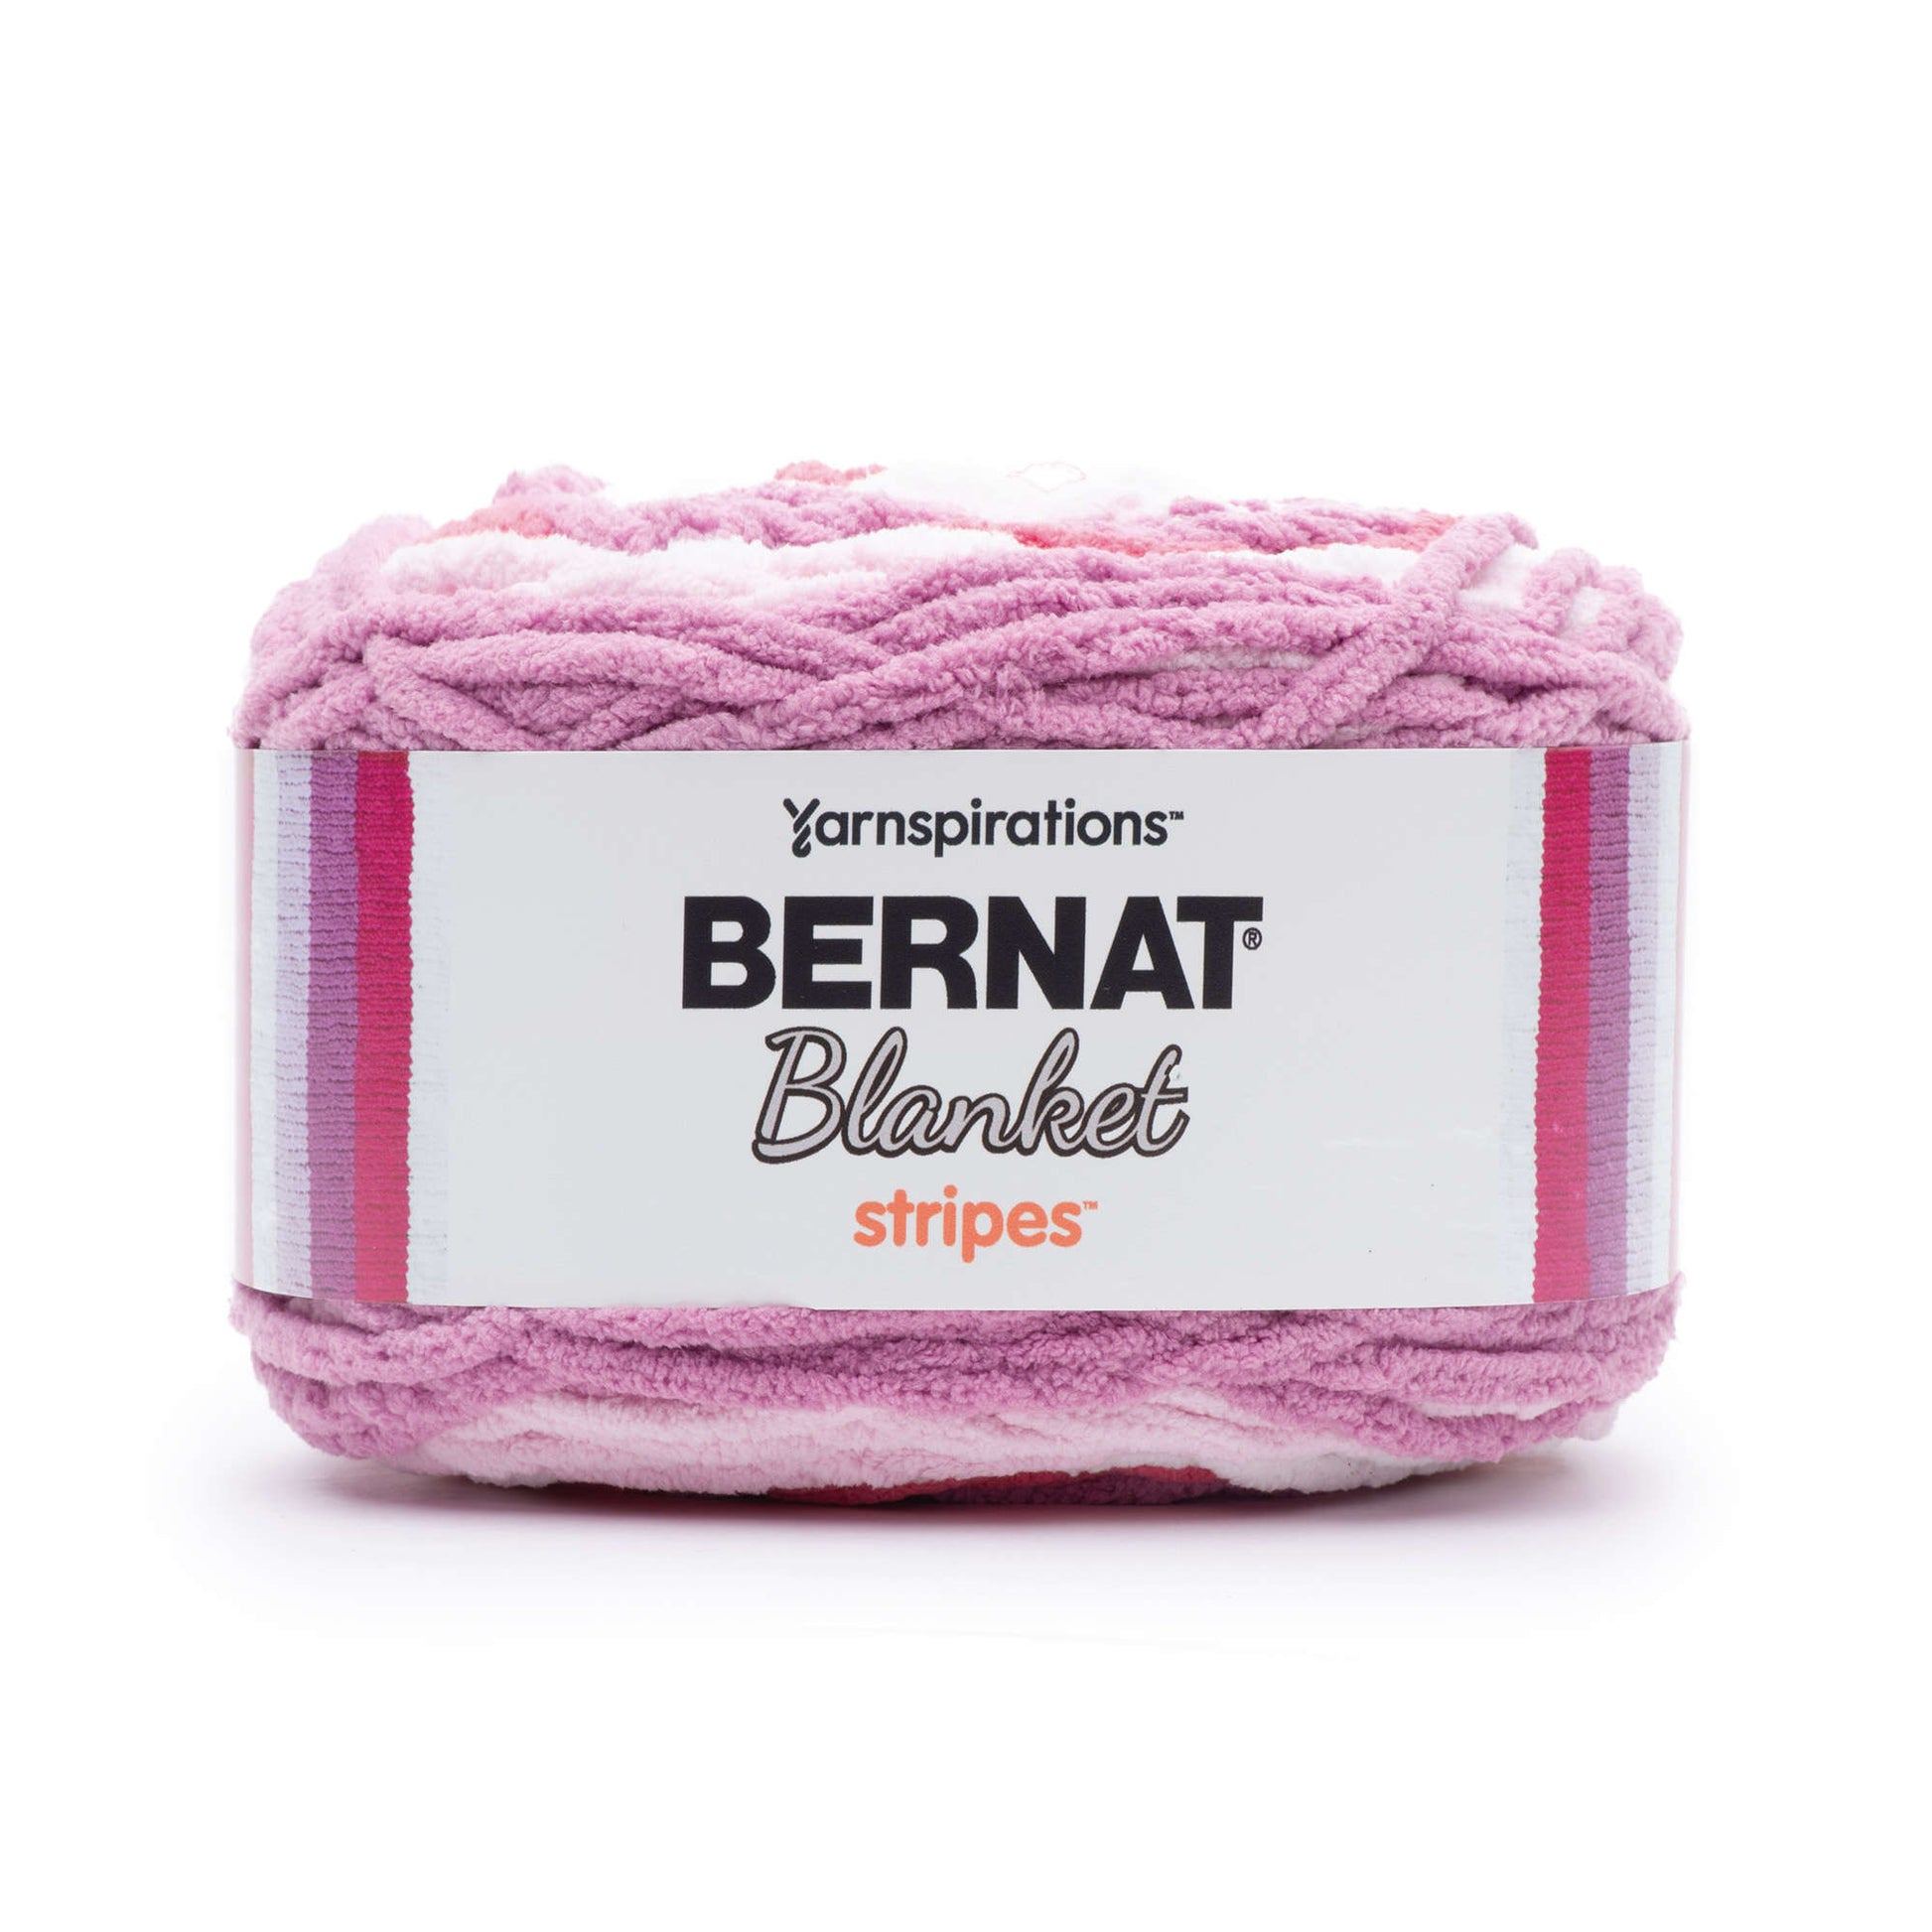 Bernat Blanket Stripes Yarn (300g/10.5oz) - Discontinued Shades In the Pink